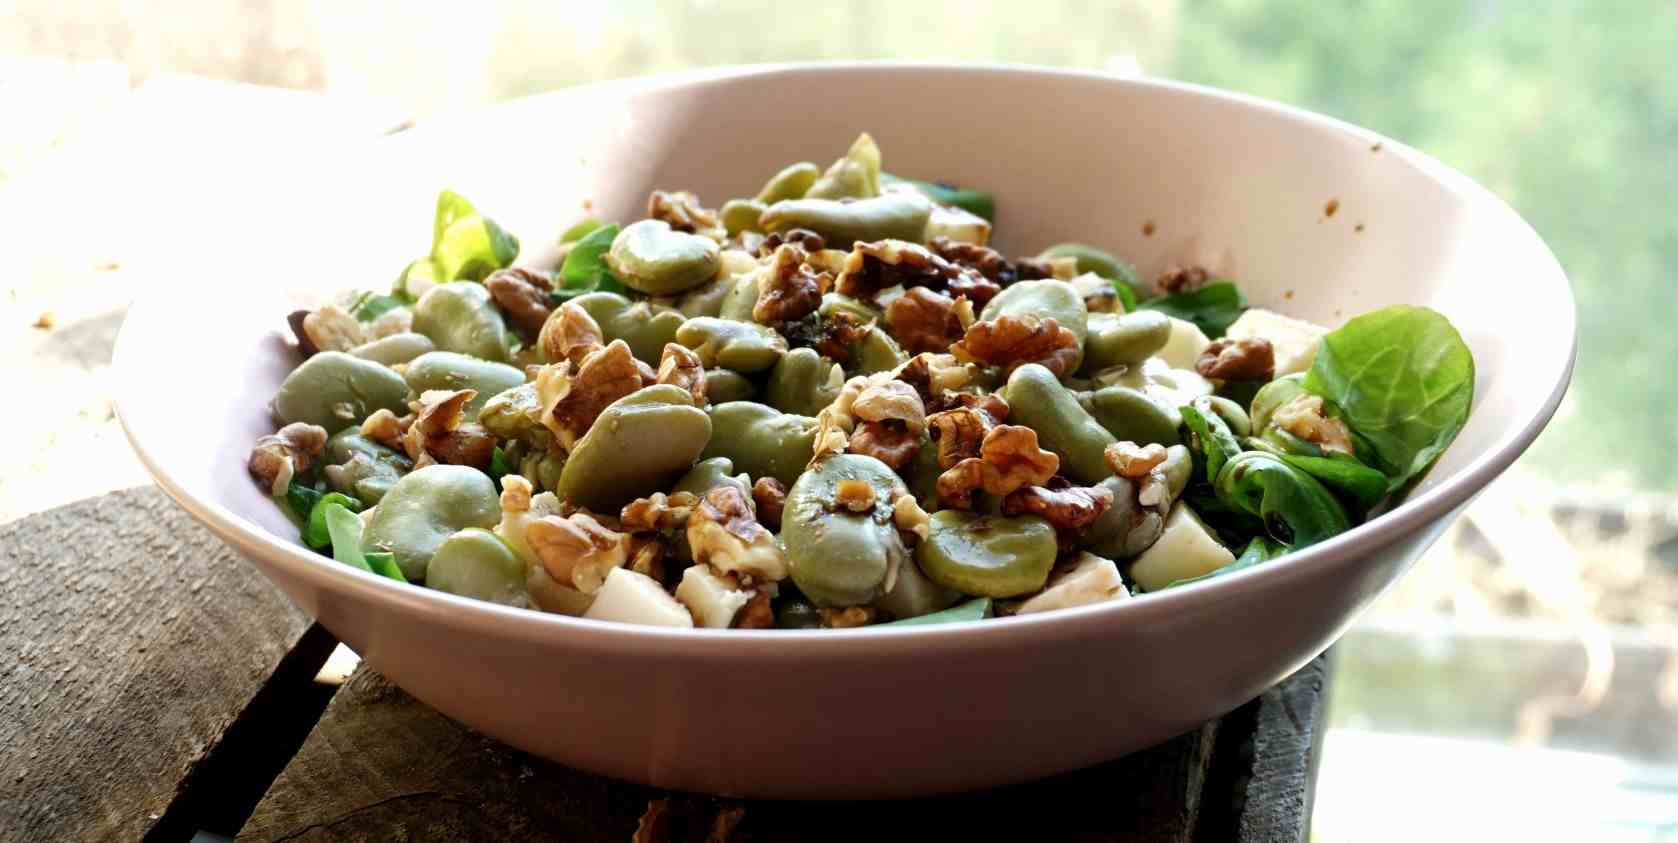 Pistachio ambrosia salad